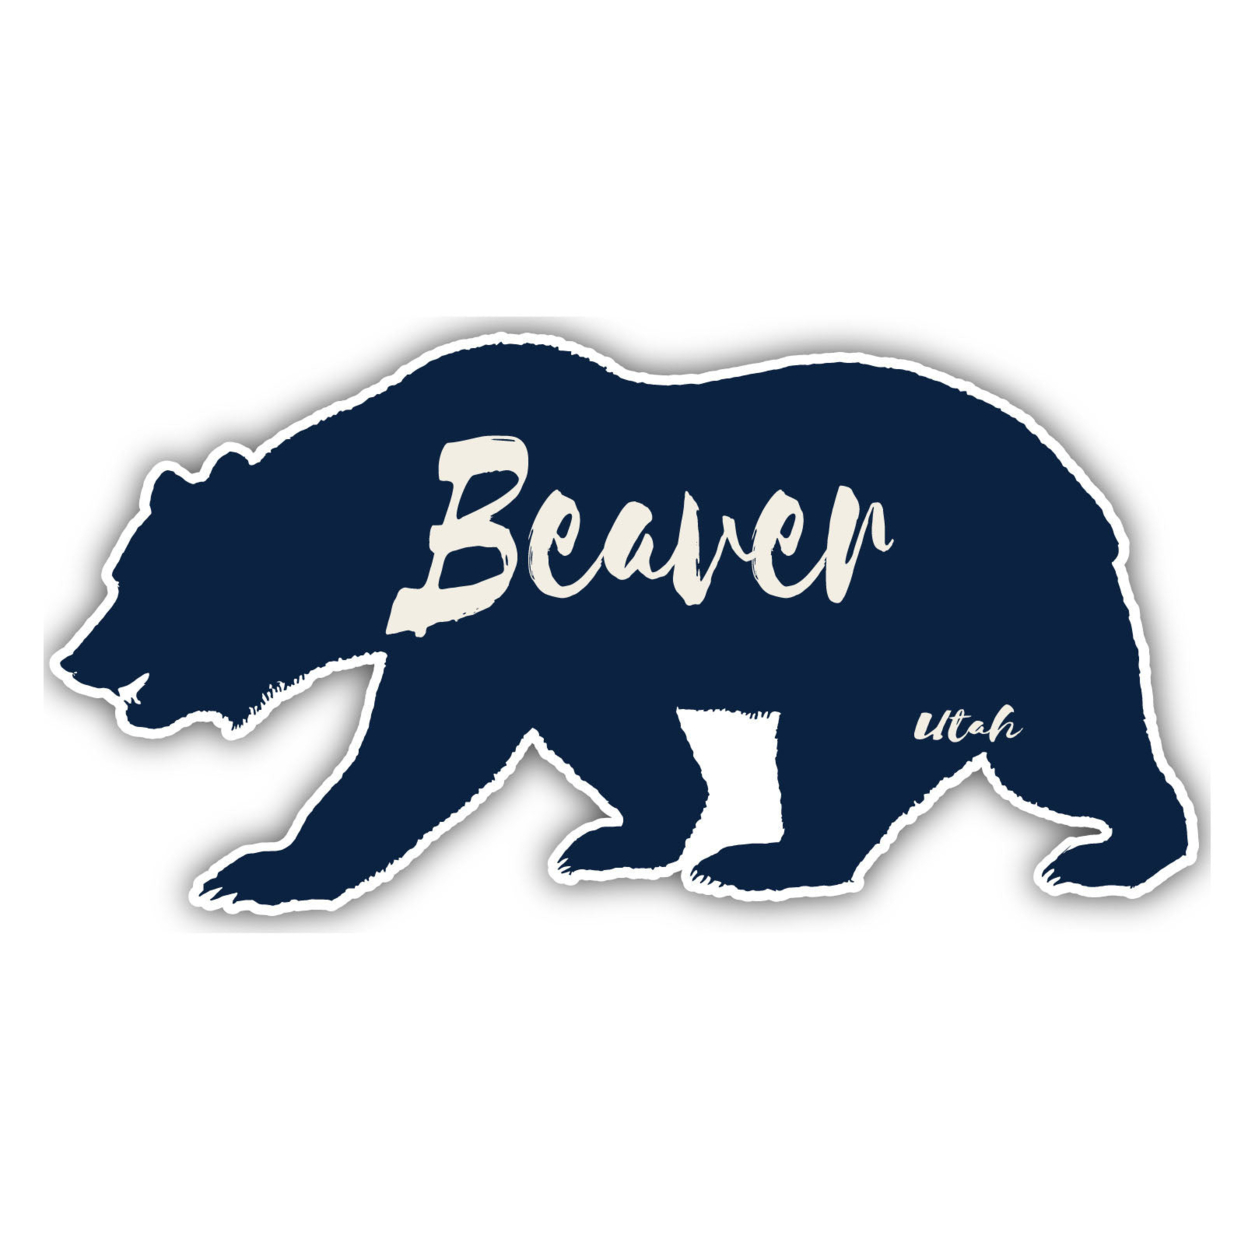 Beaver Utah Souvenir Decorative Stickers (Choose Theme And Size) - Single Unit, 2-Inch, Tent